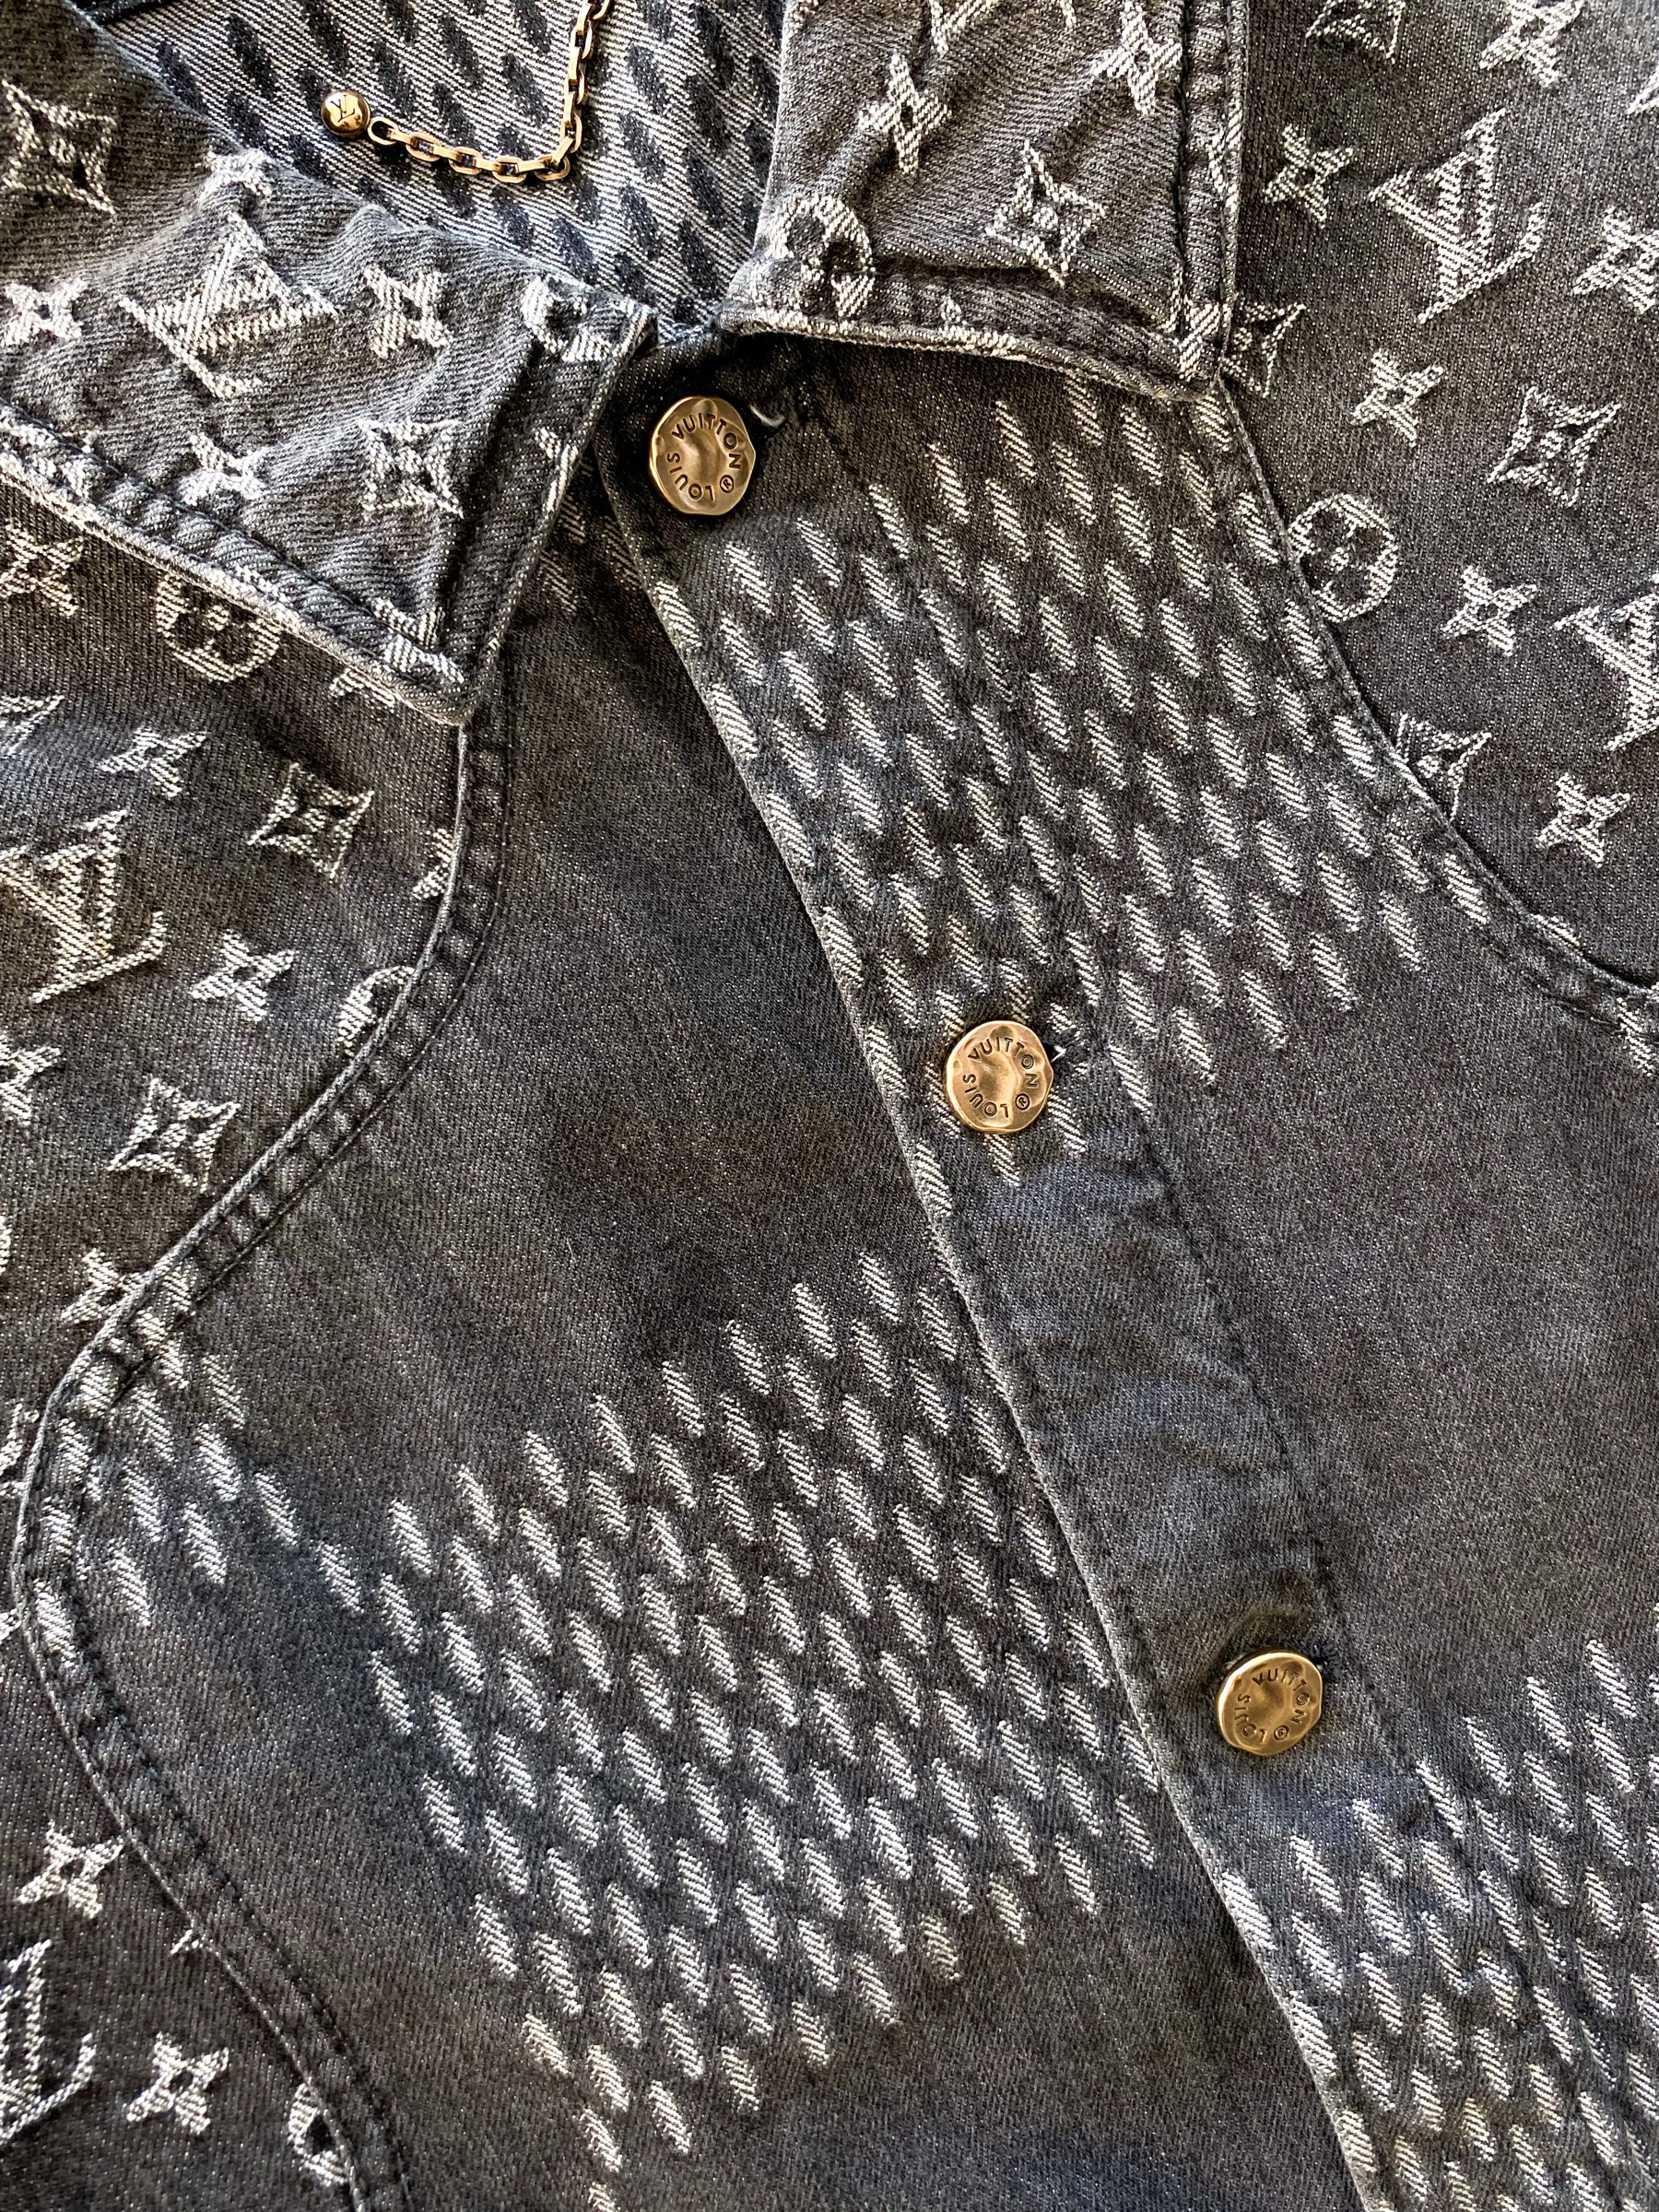 louis vuitton grey denim button jacket lv monogram logo